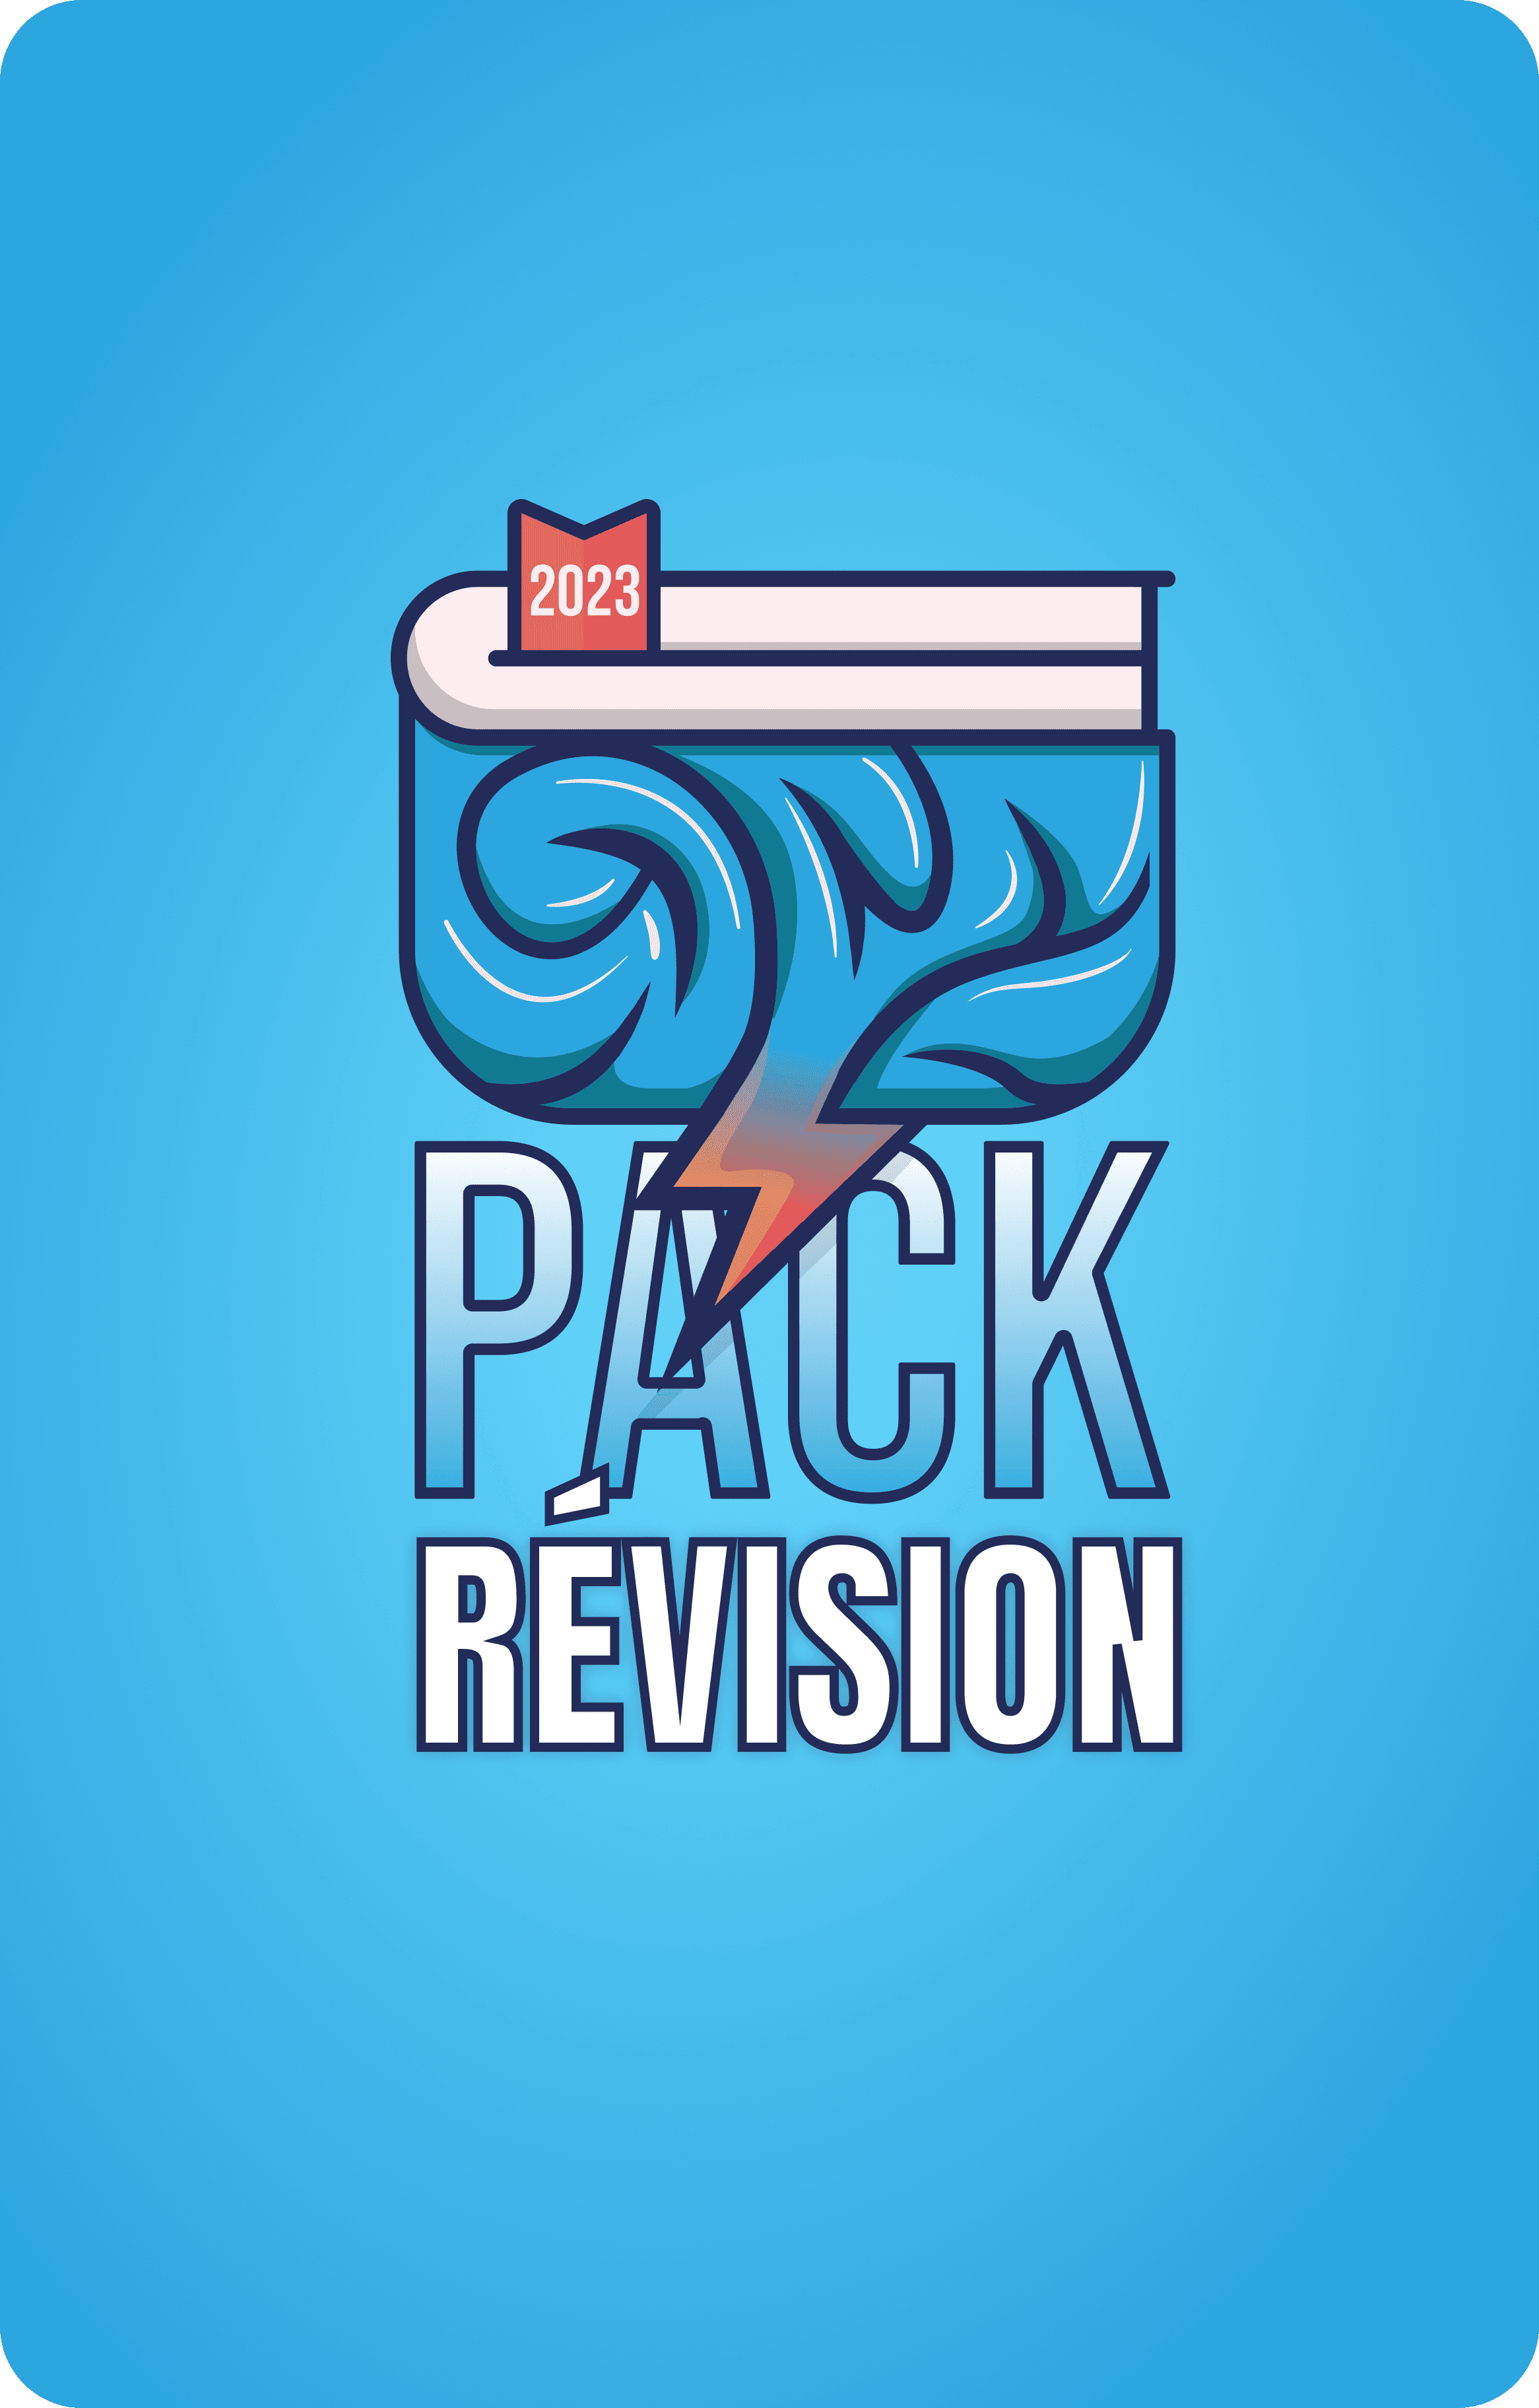 pack-revision-logo